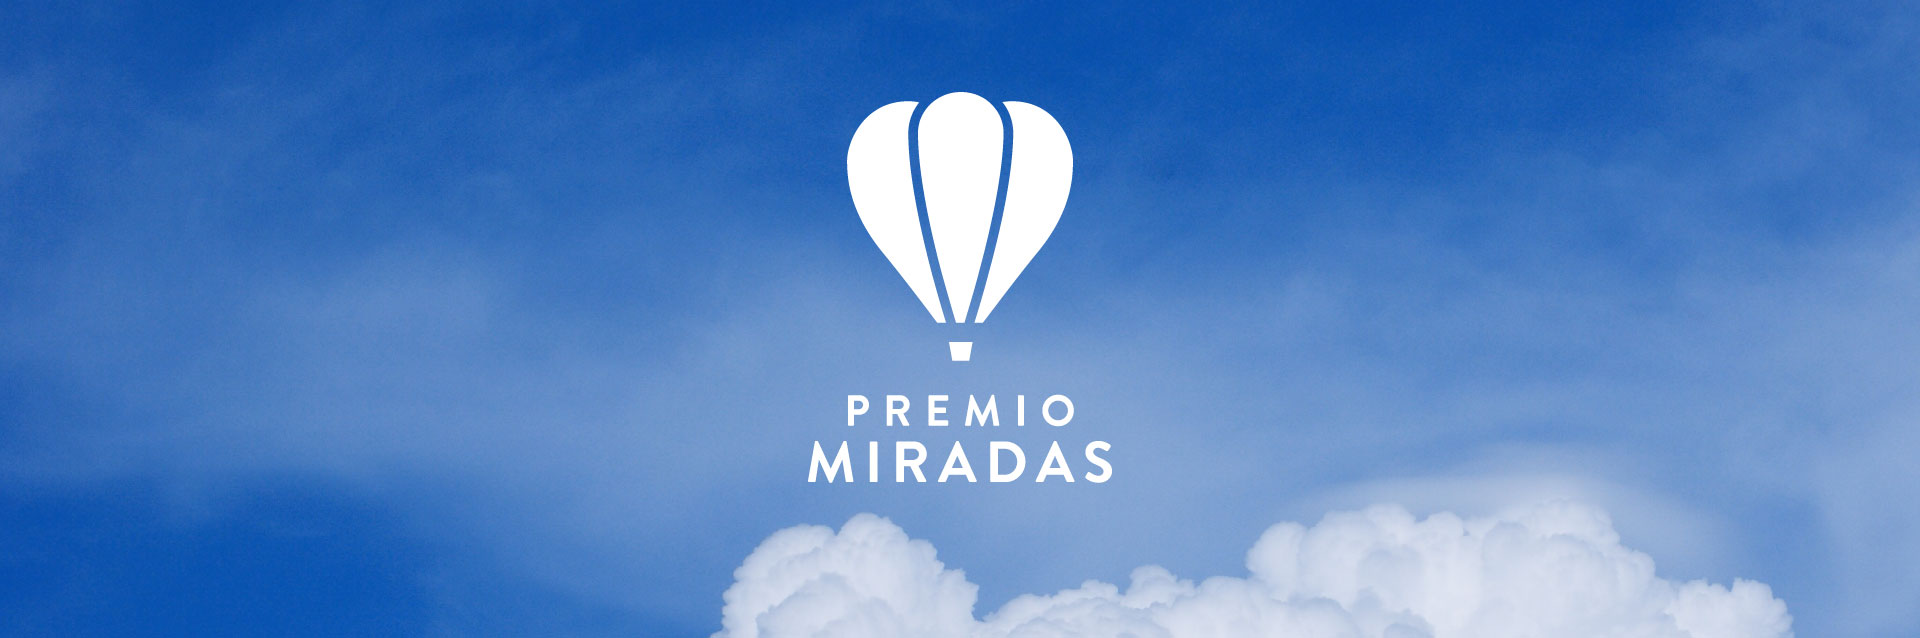 Fundación Manantial - Premio Miradas 2018